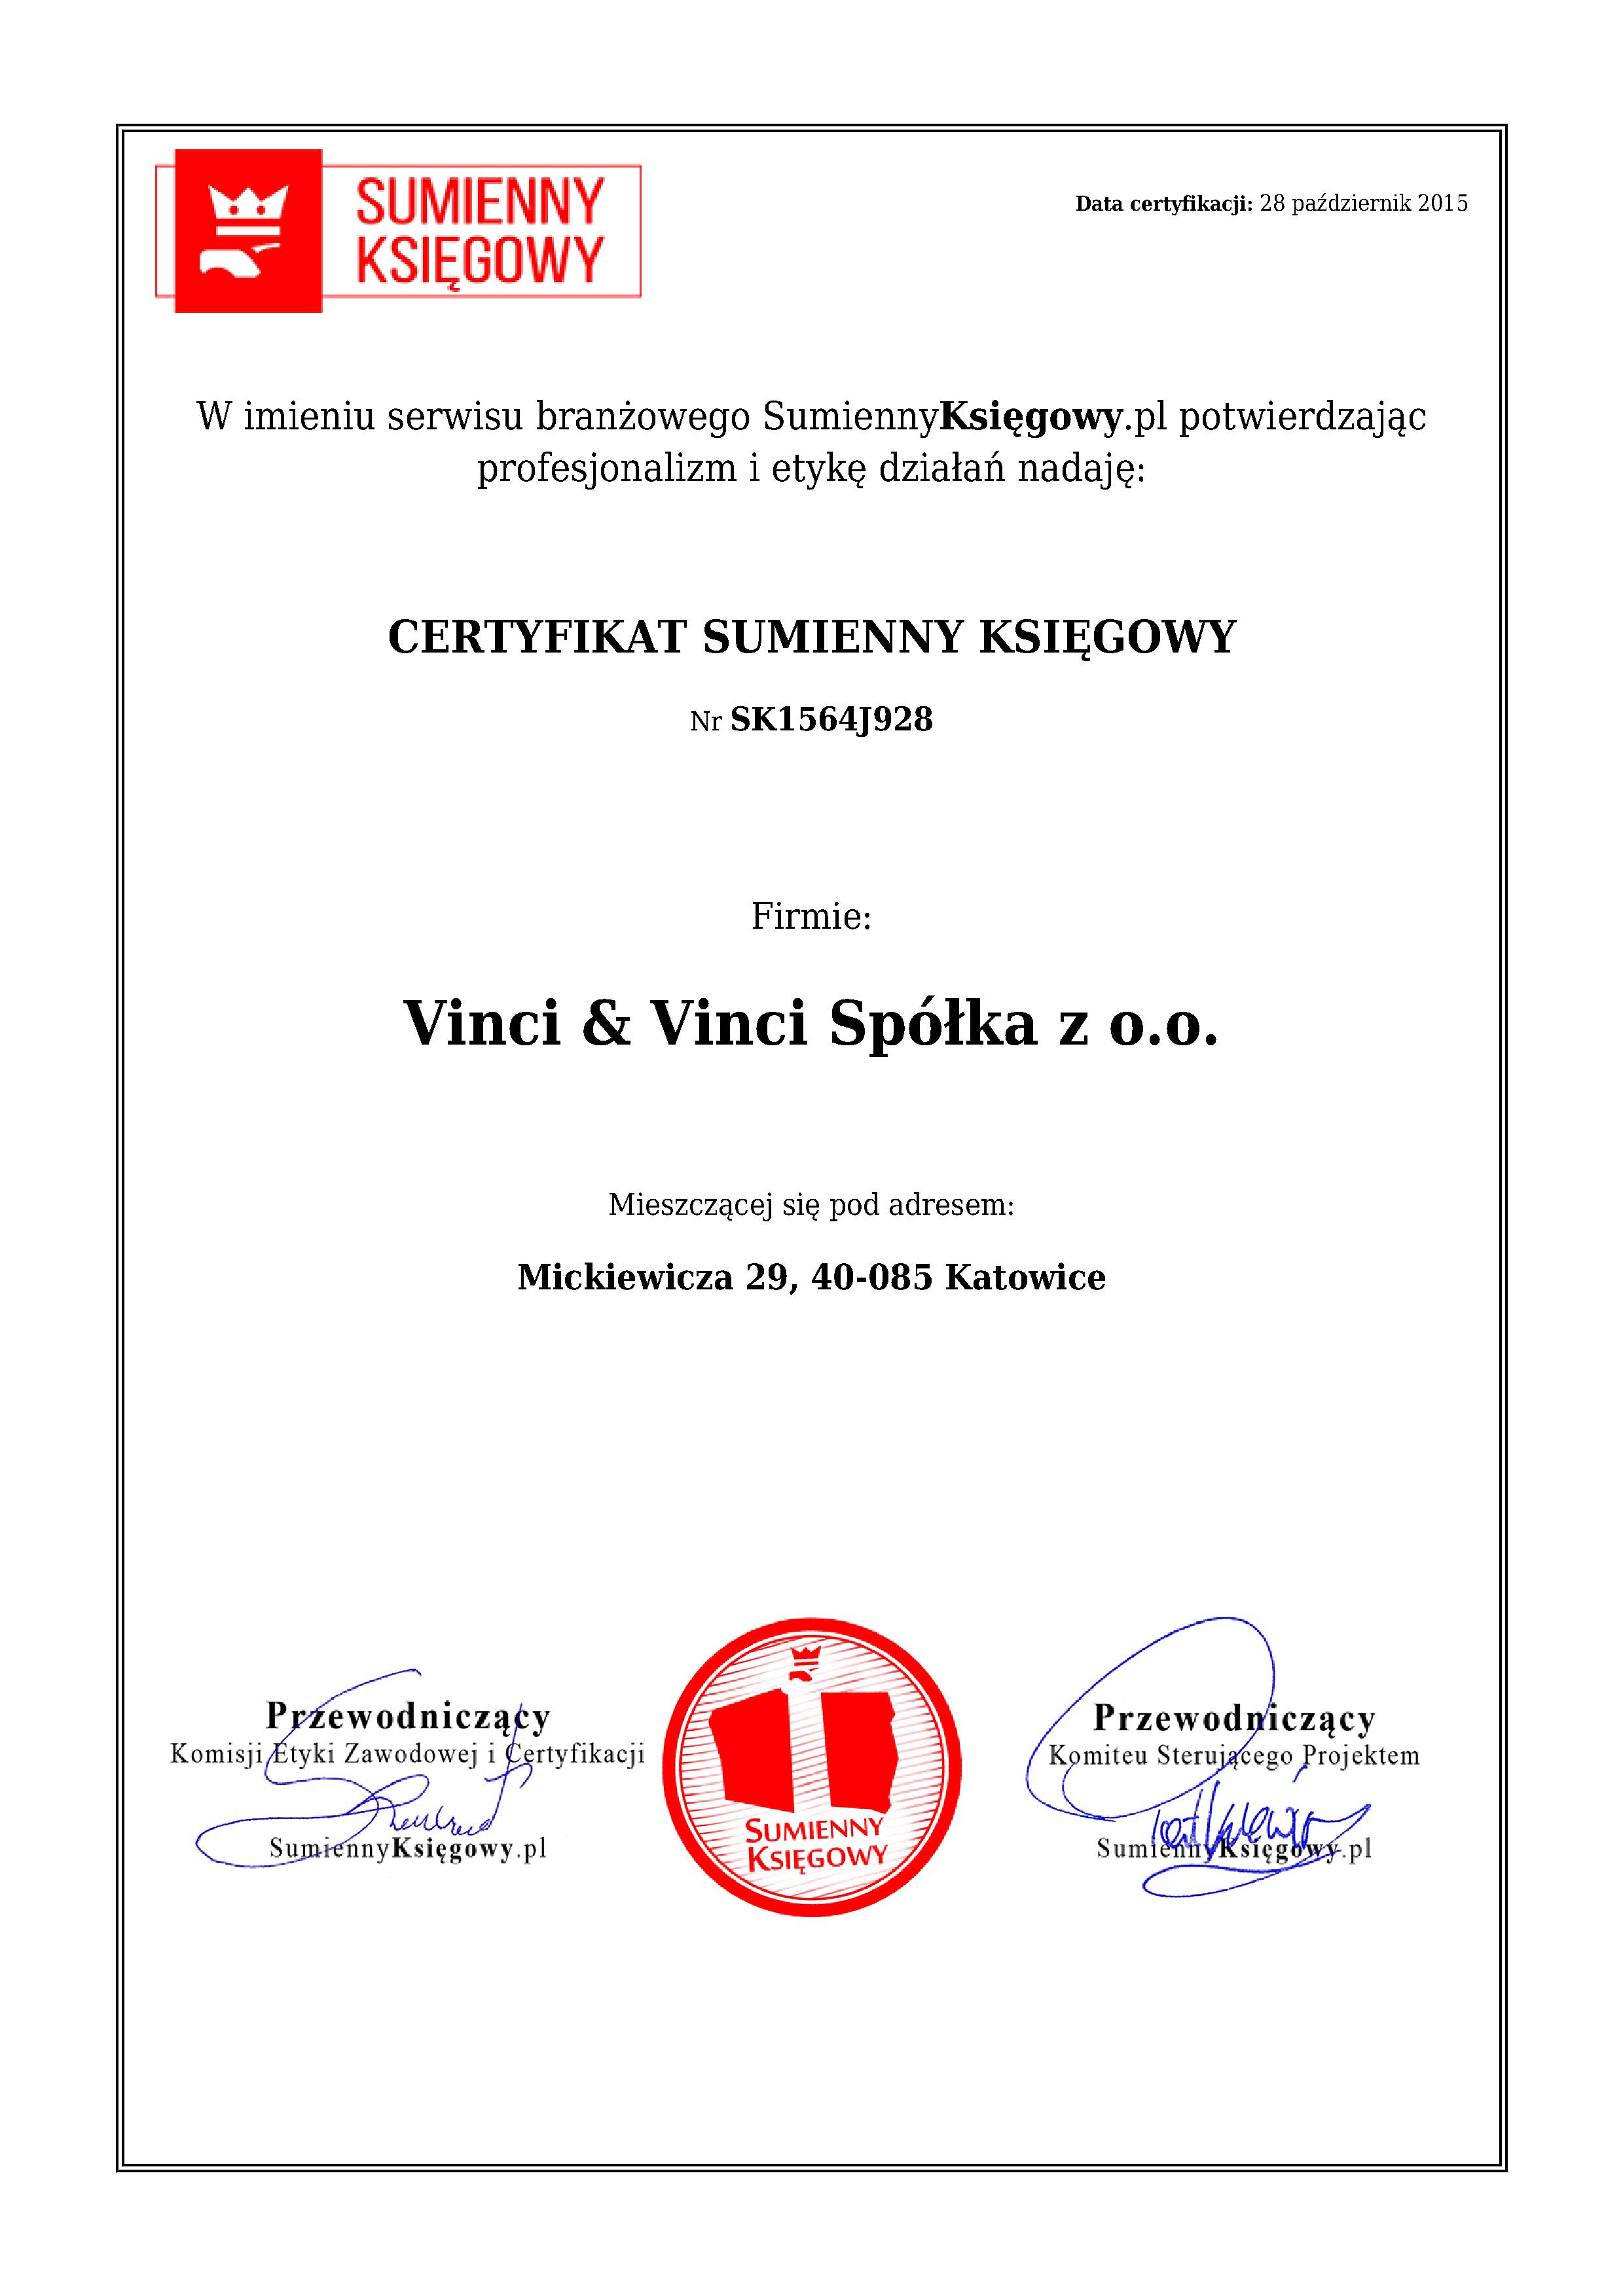 Vinci & Vinci Spółka z o.o. certyfikat 1